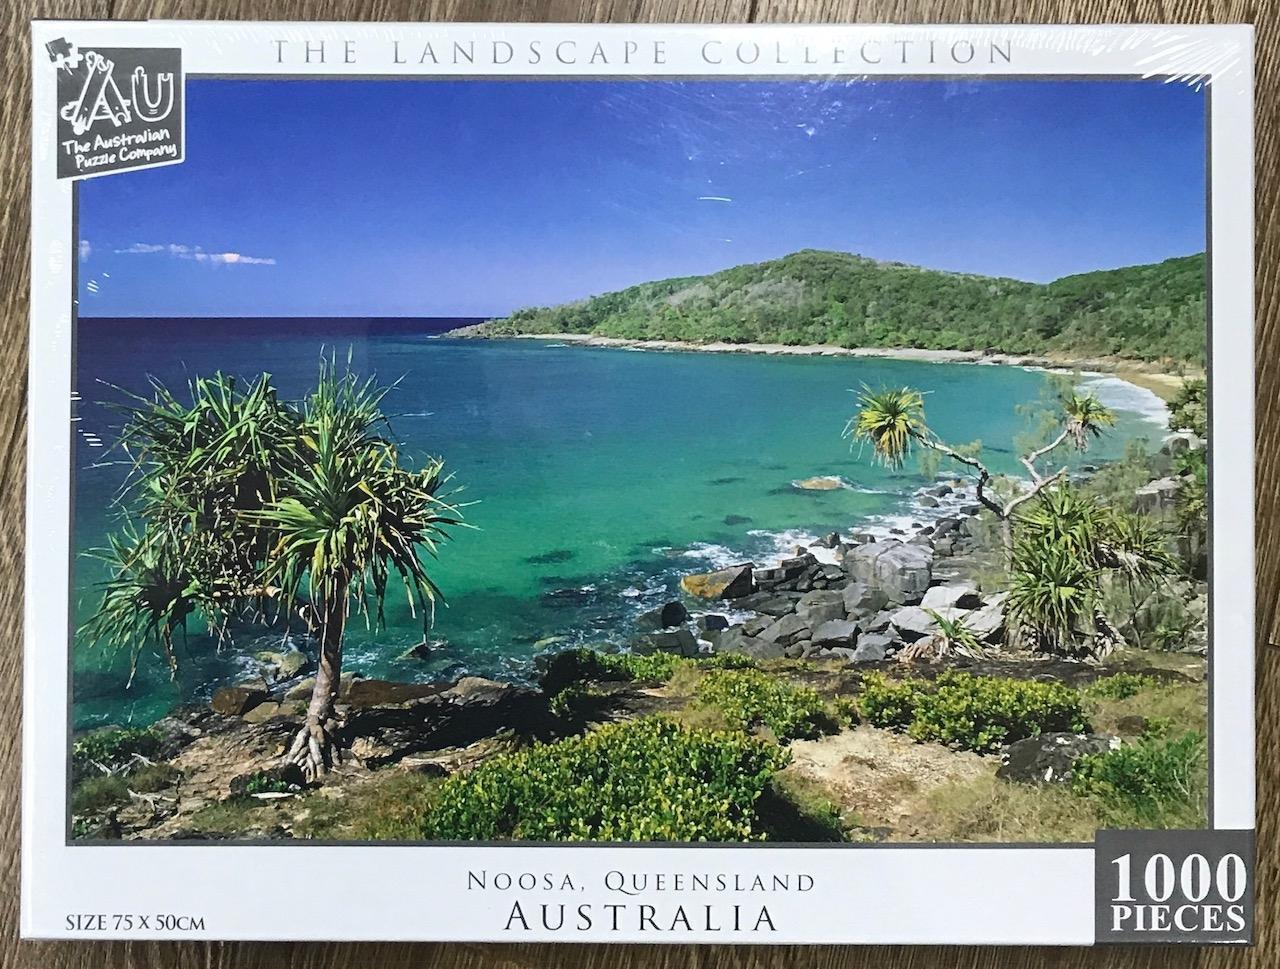 The Landscape Collection Noosa Queensland Australia 1000 Pieces Jigsaw Puzzle Fun Activity Gift Idea